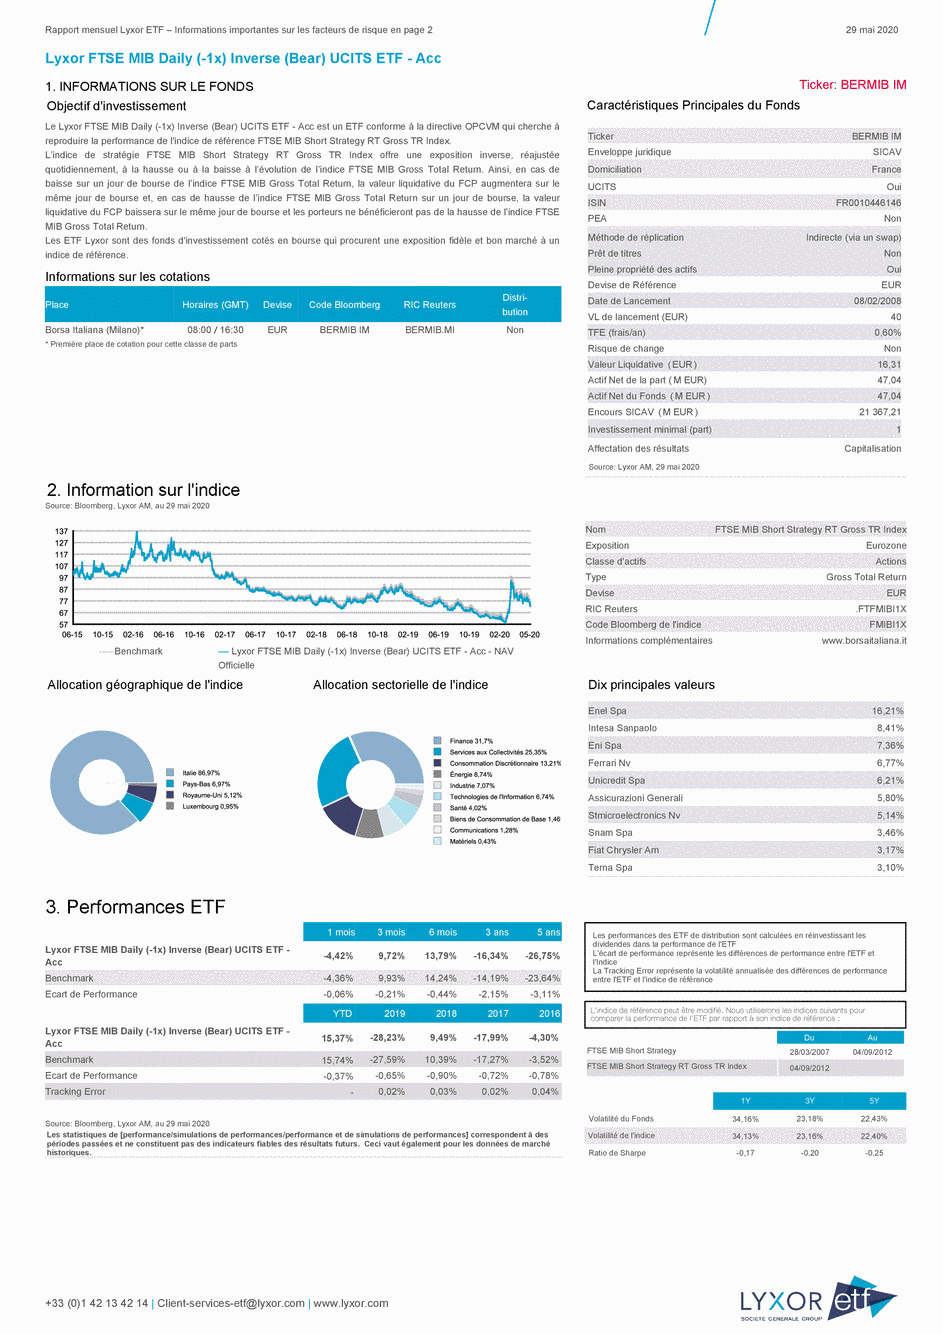 Reporting Lyxor FTSE MIB Daily (-1x) Inverse (Bear) UCITS ETF - Acc - 29/05/2020 - Français